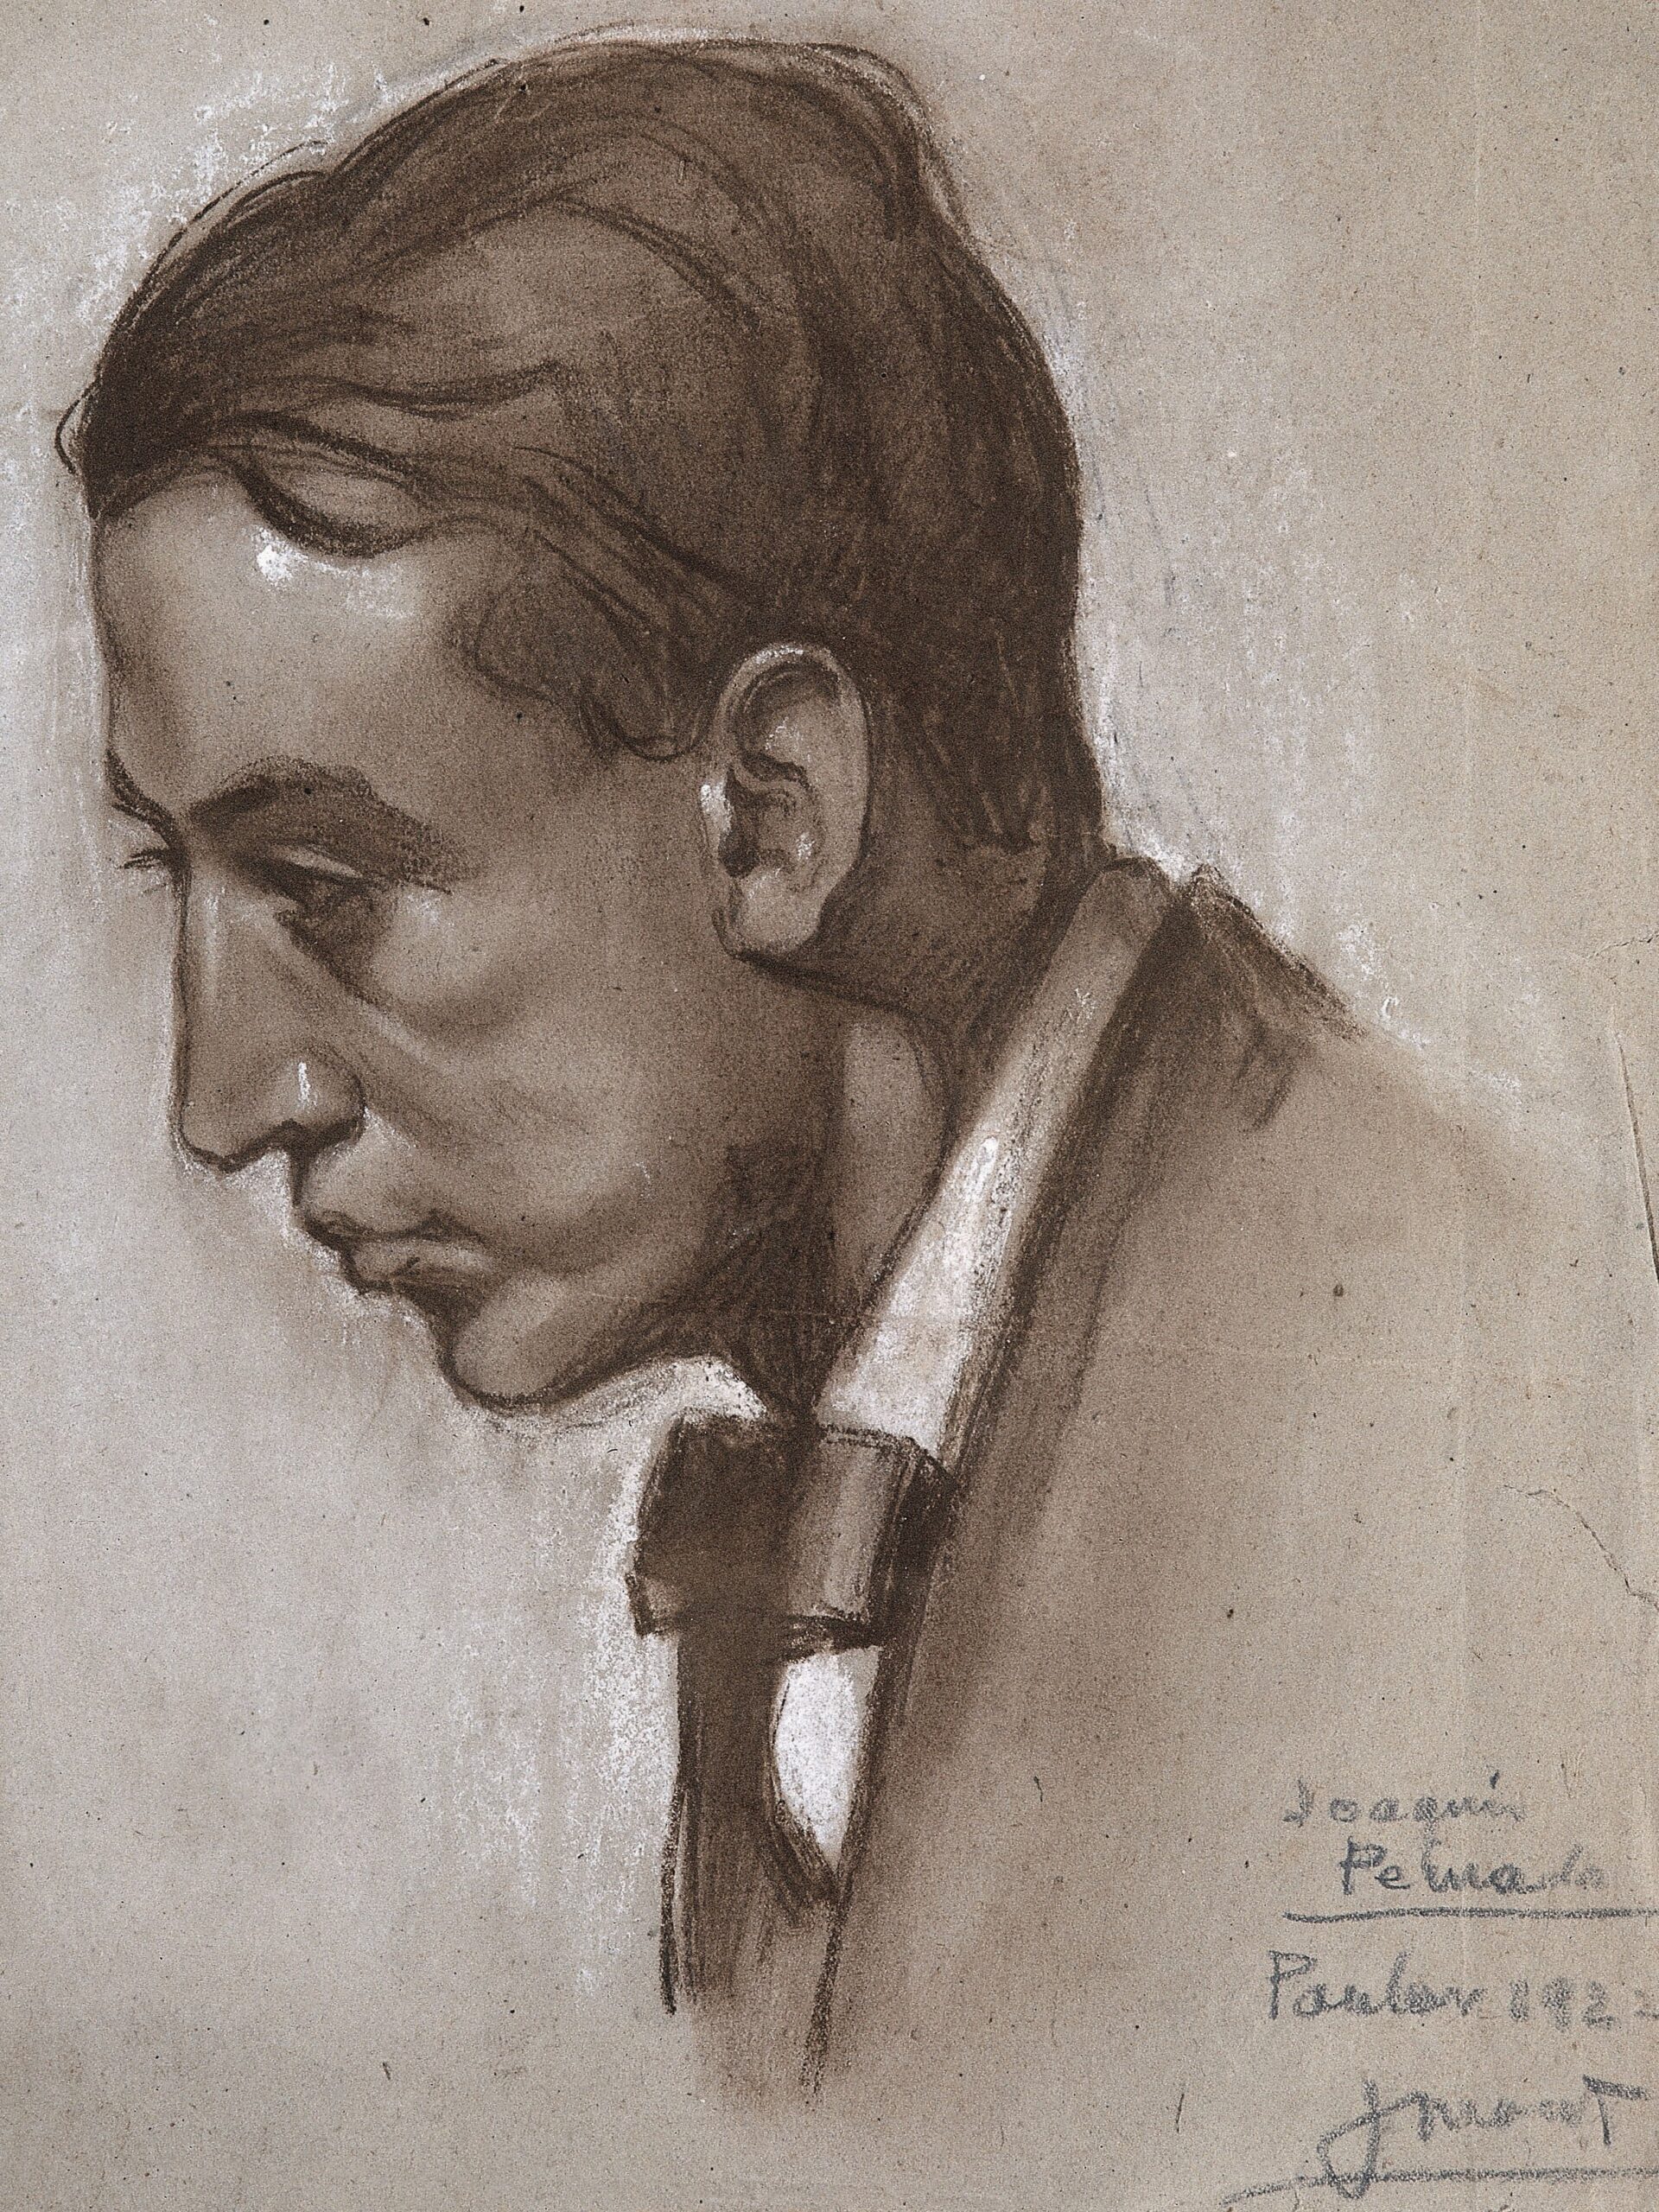 Dibujo de José Manaut titulado Don Joaquín peinado, 1923. Lápiz sobre papel.